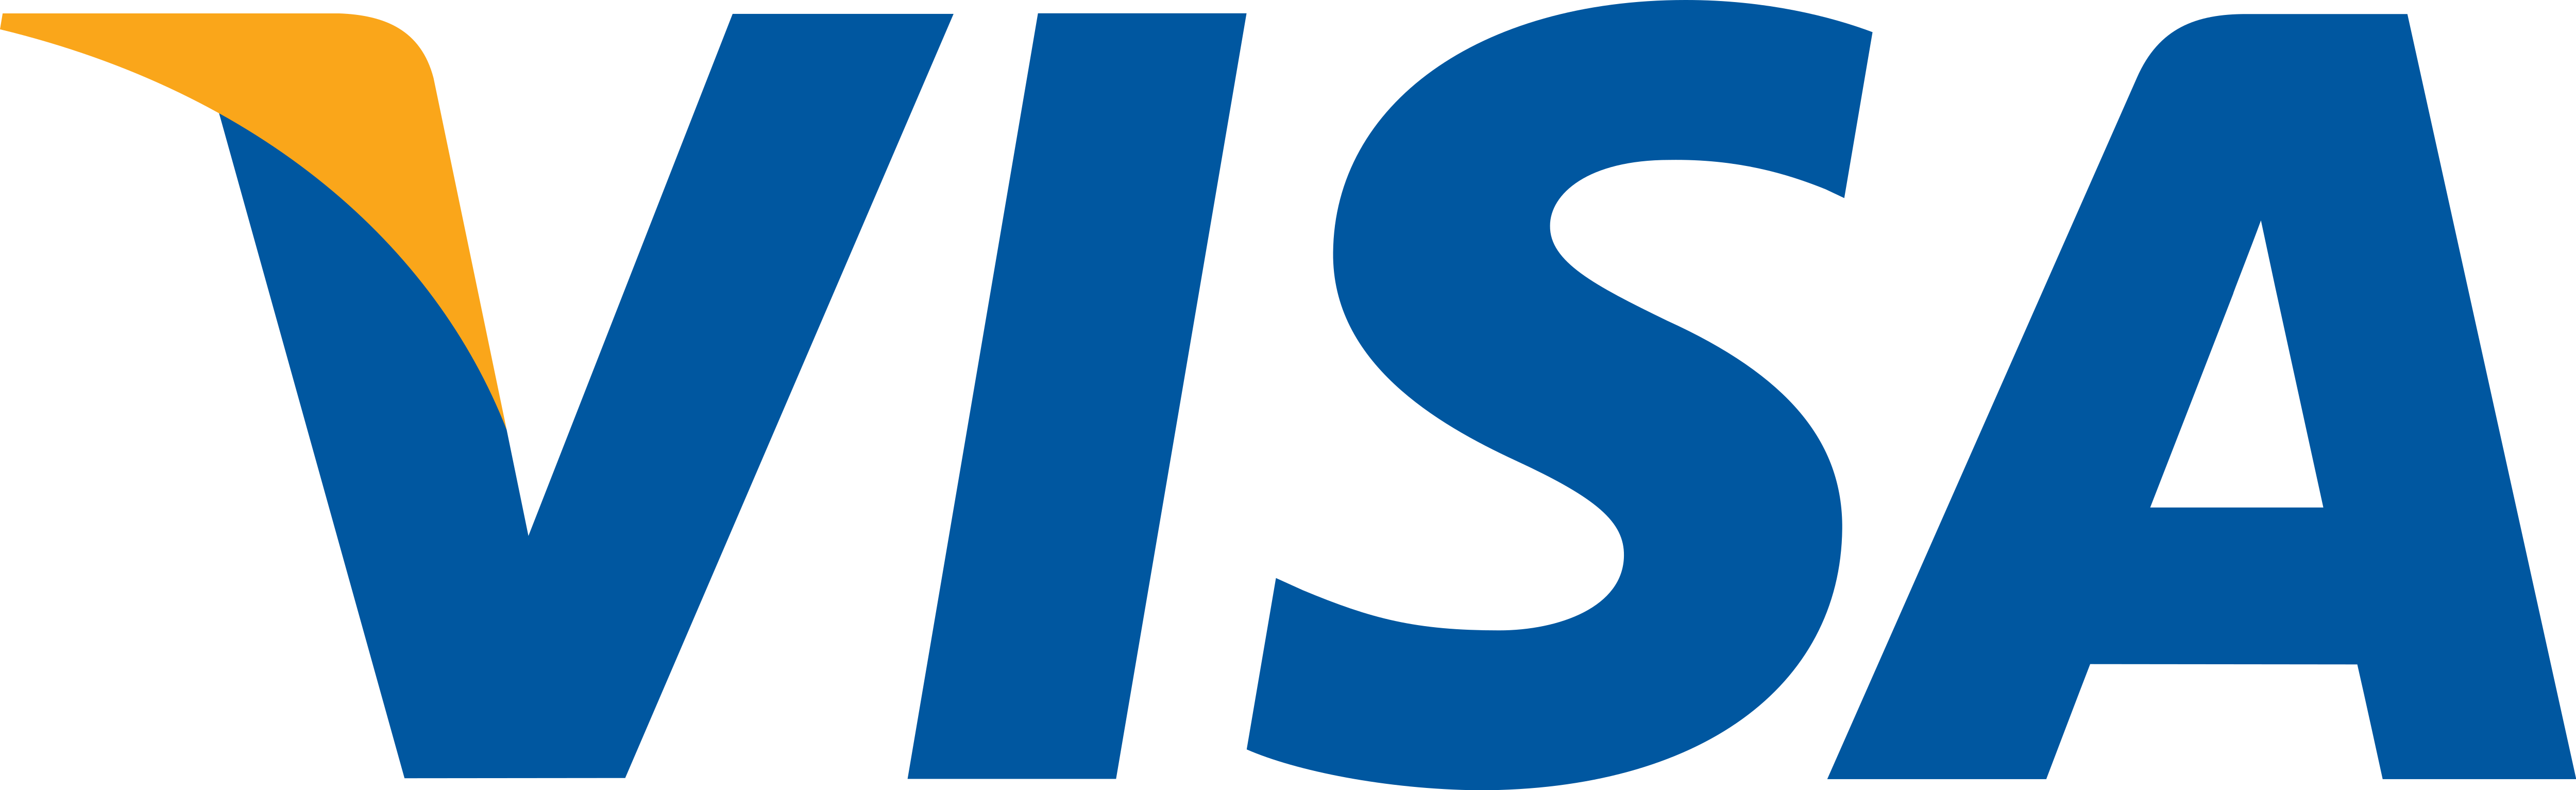 Visa logo PNG